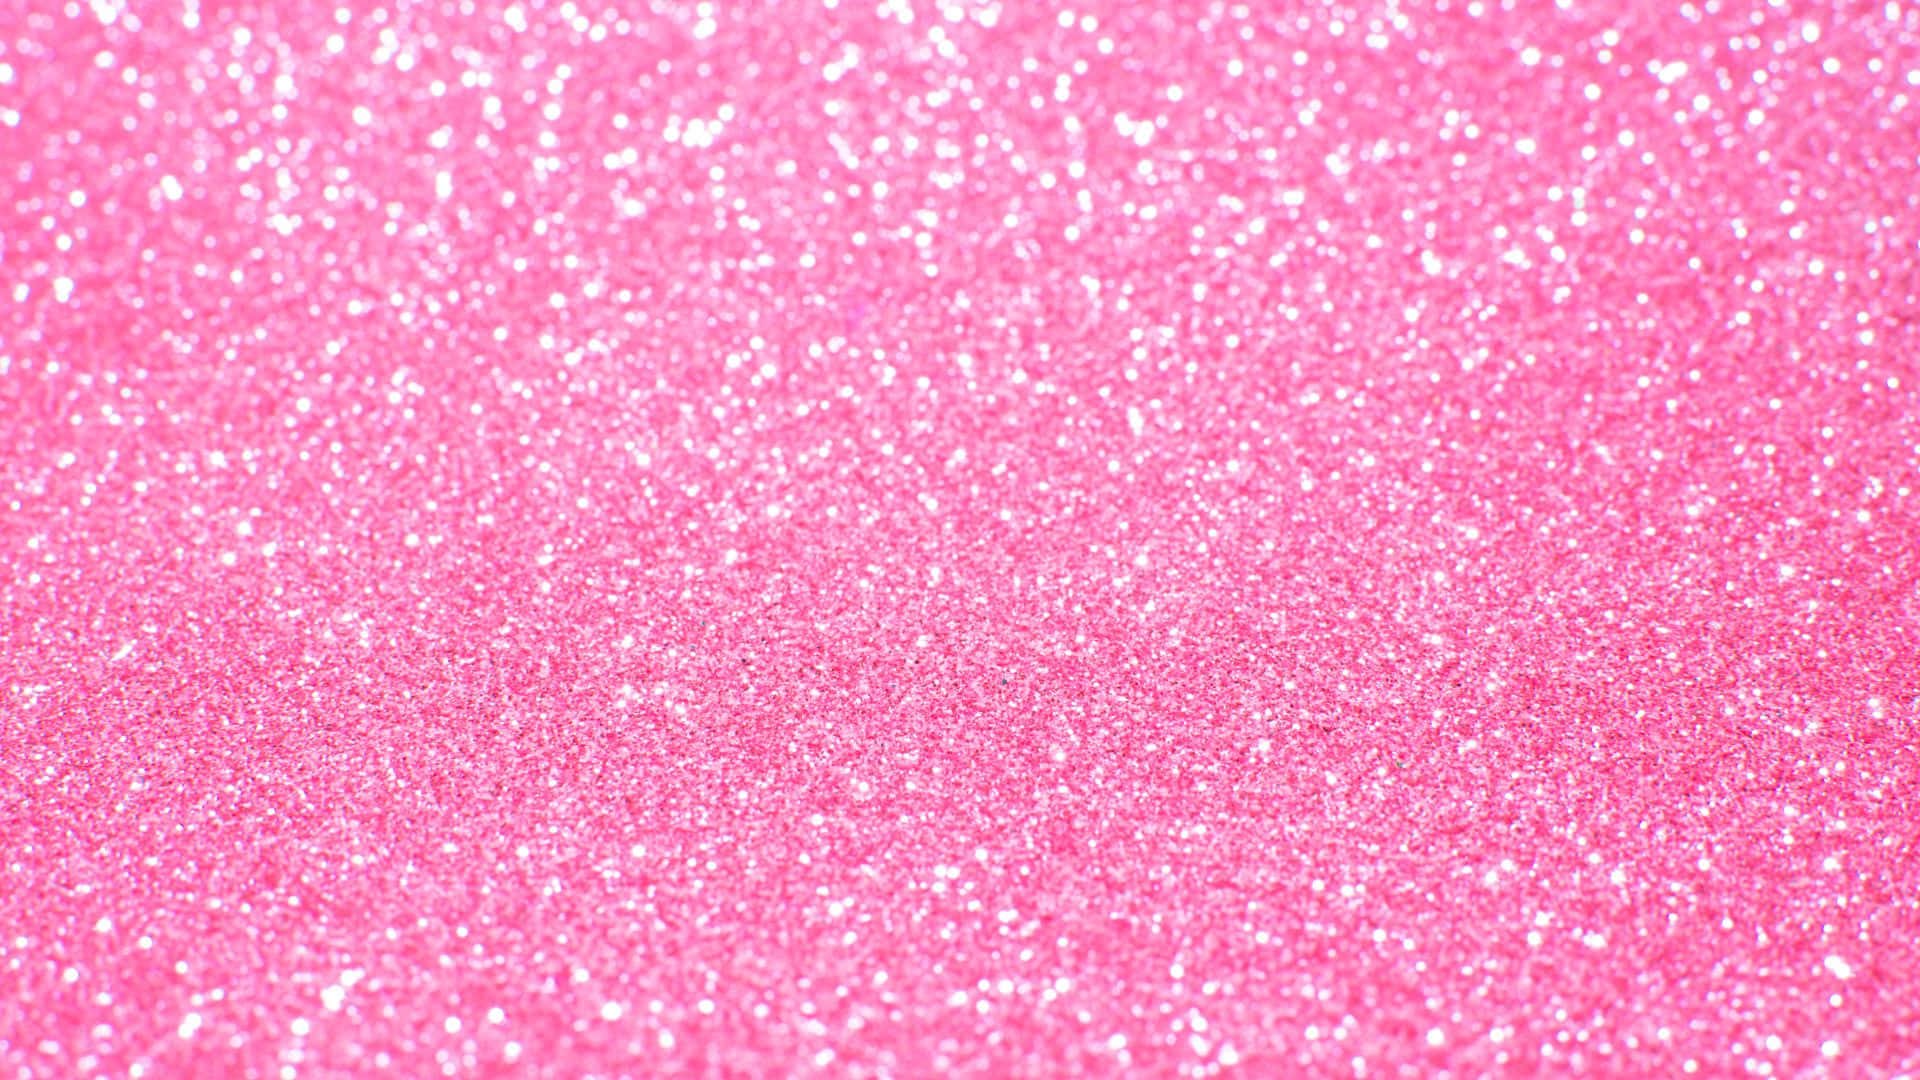 Stunning Pink Sparkles Background Wallpaper